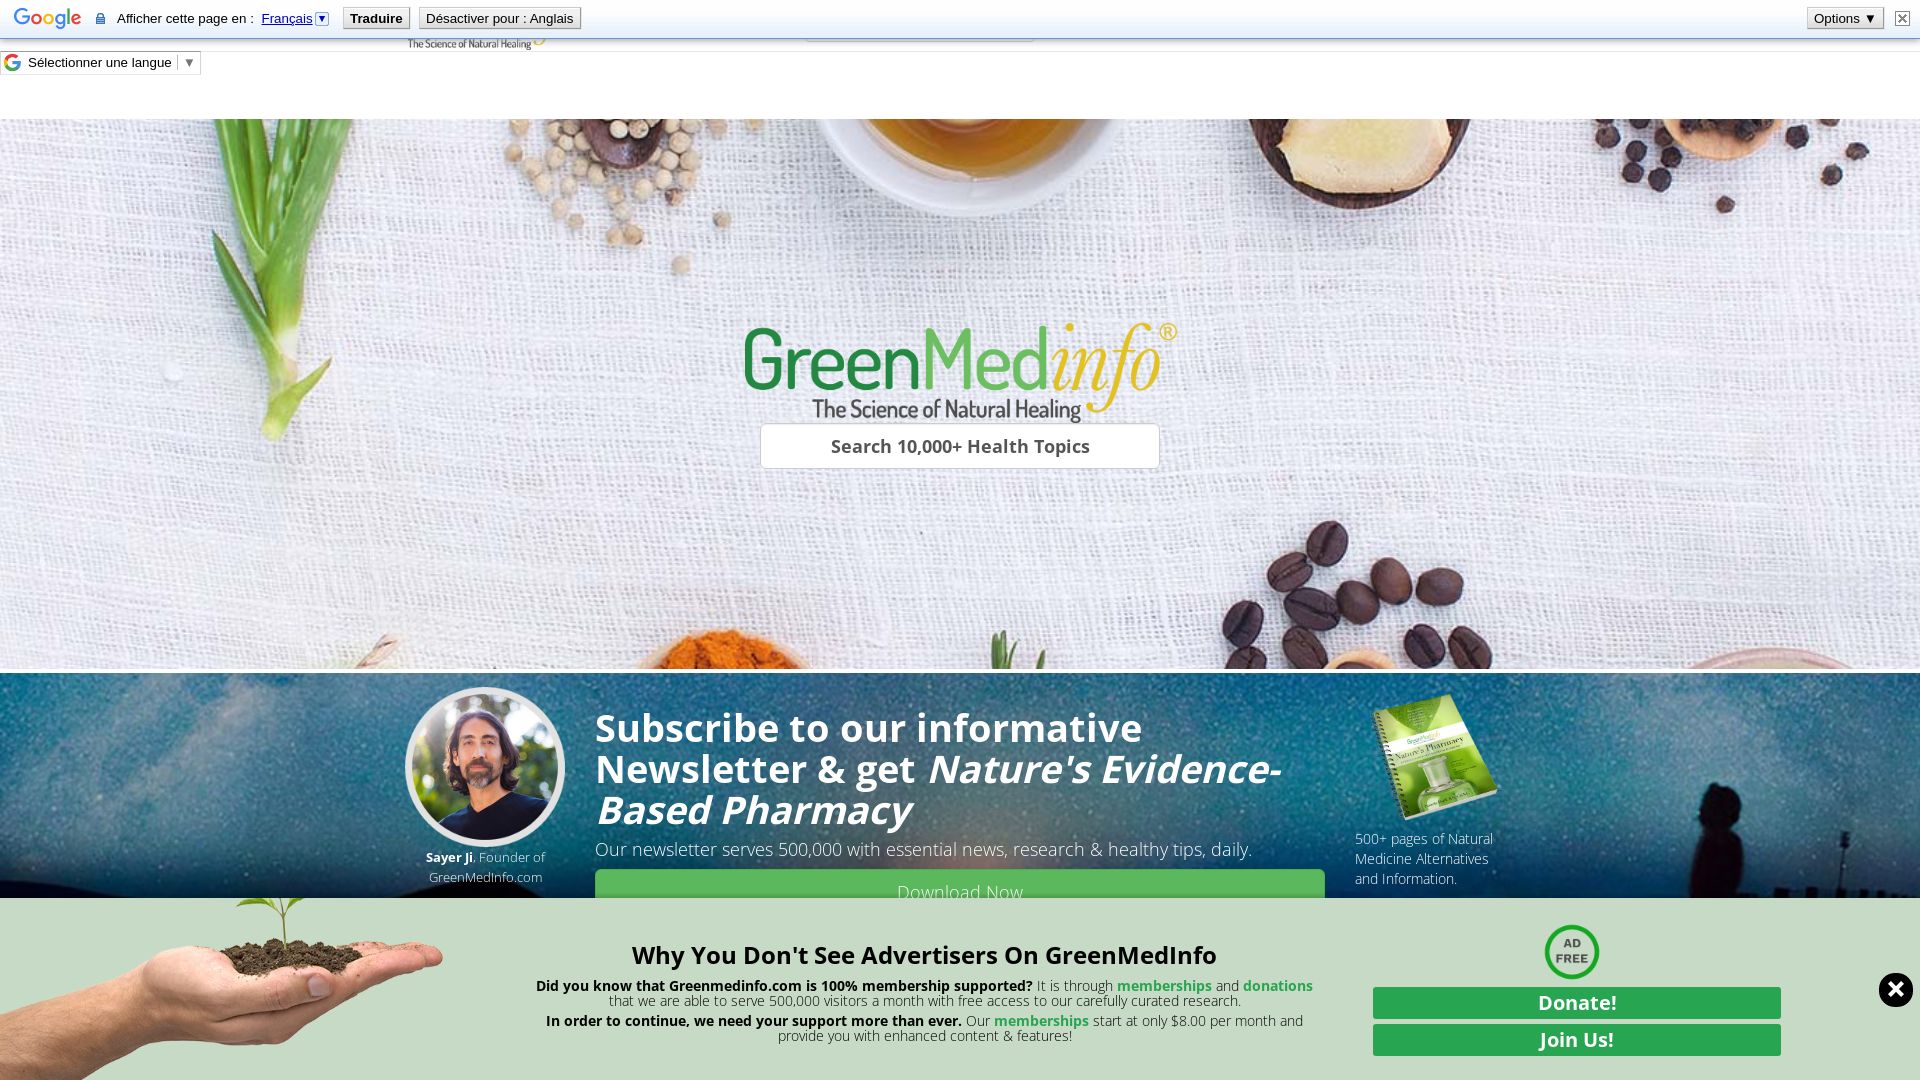 Website status greenmedinfo.com is   ONLINE